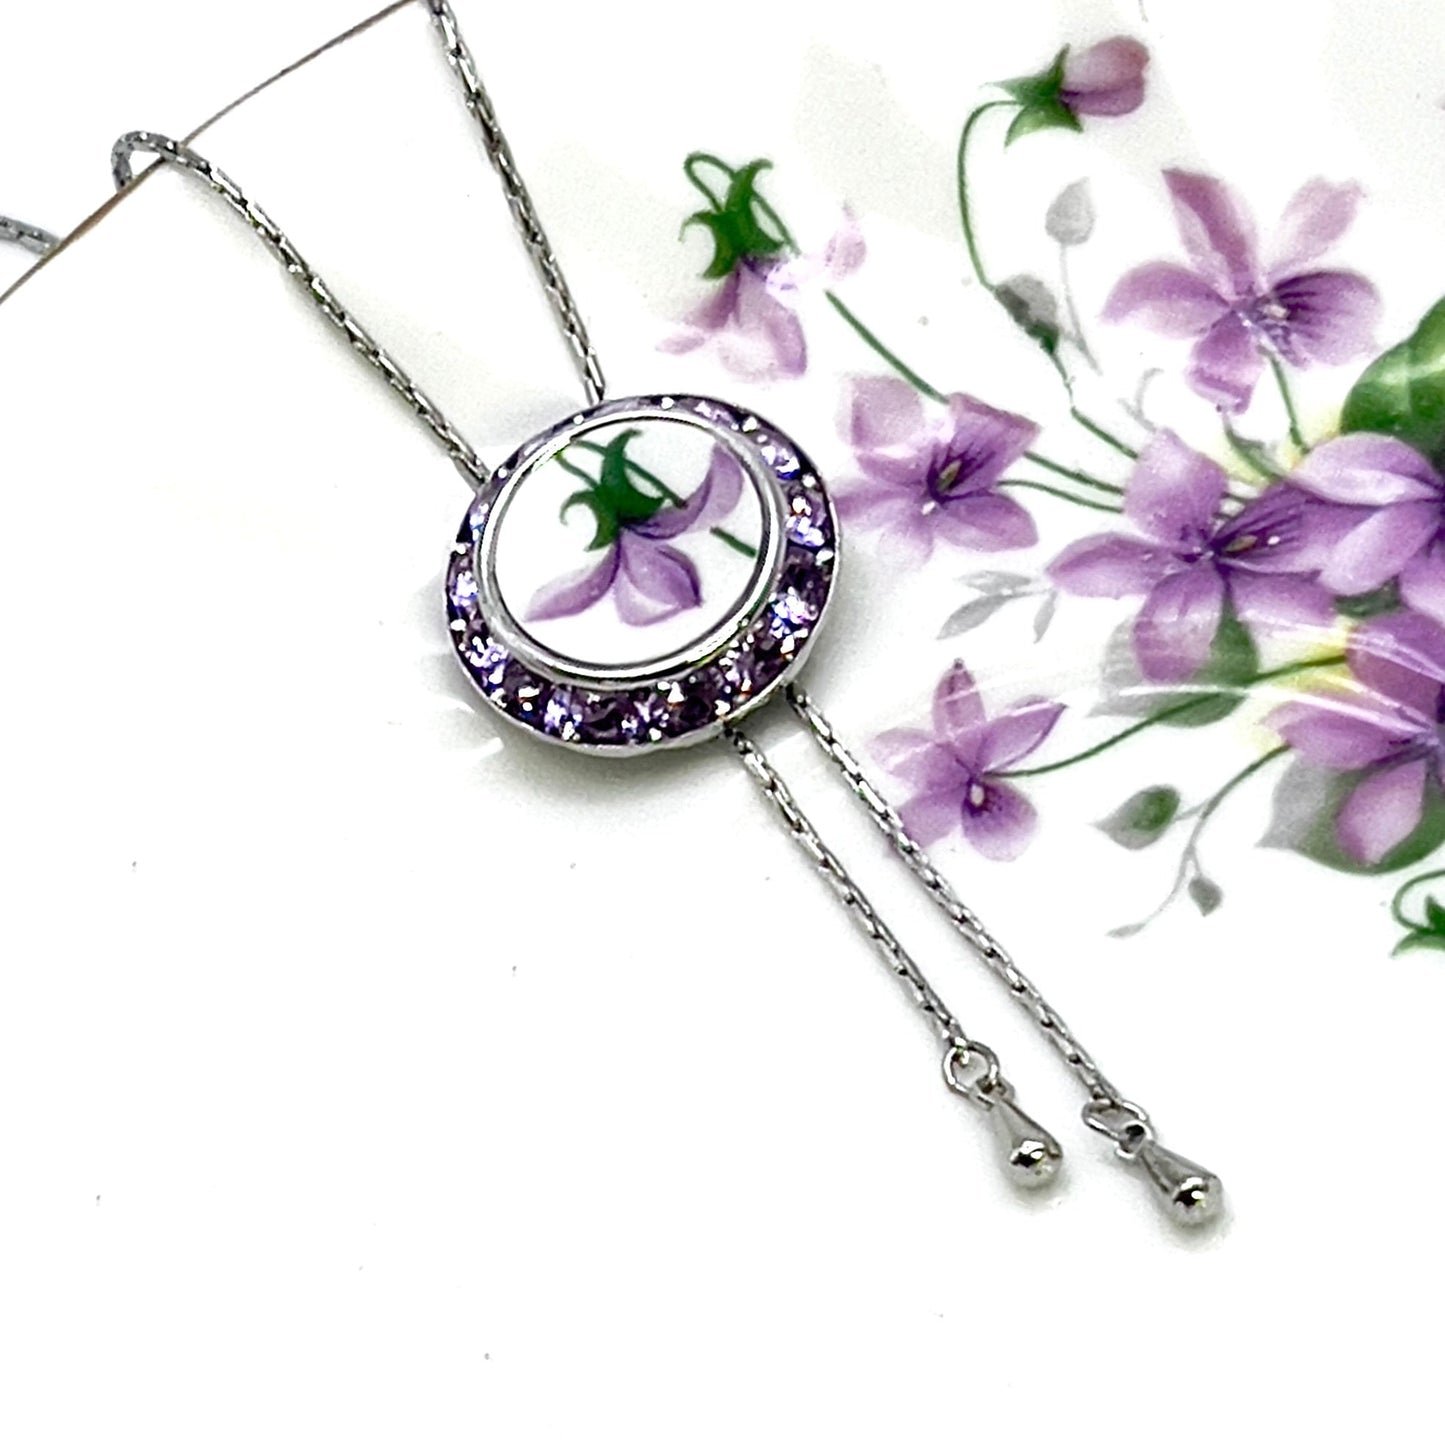 Adjustable Violet Lariat Necklace, Broken China Jewelry, Crystal Bolo Tie Necklace, Vintage China, 30” Long Necklace